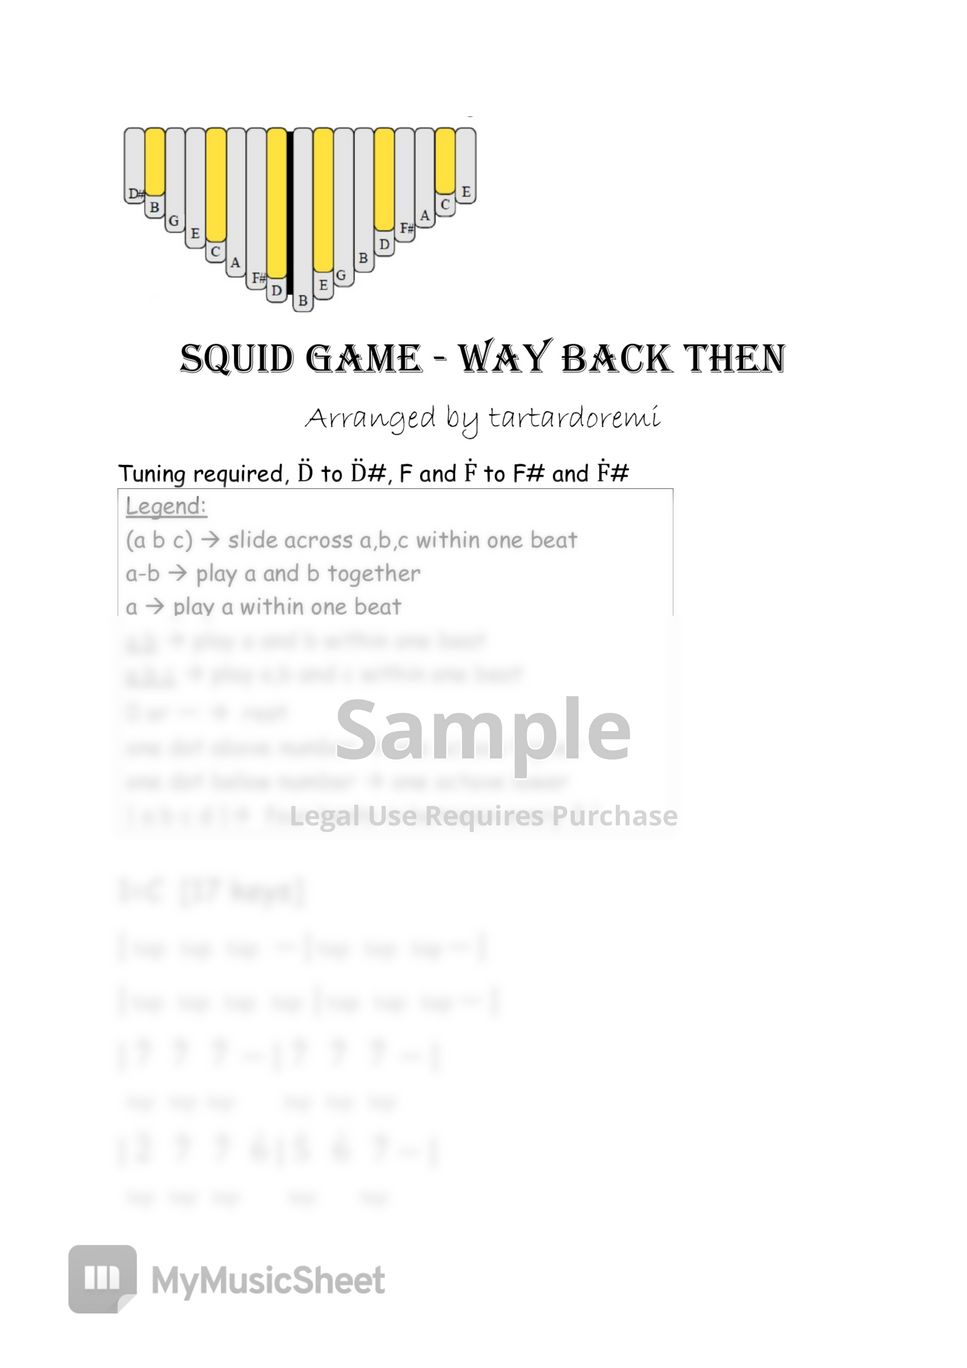 Squid Game - Way Back Then by tartardoremi